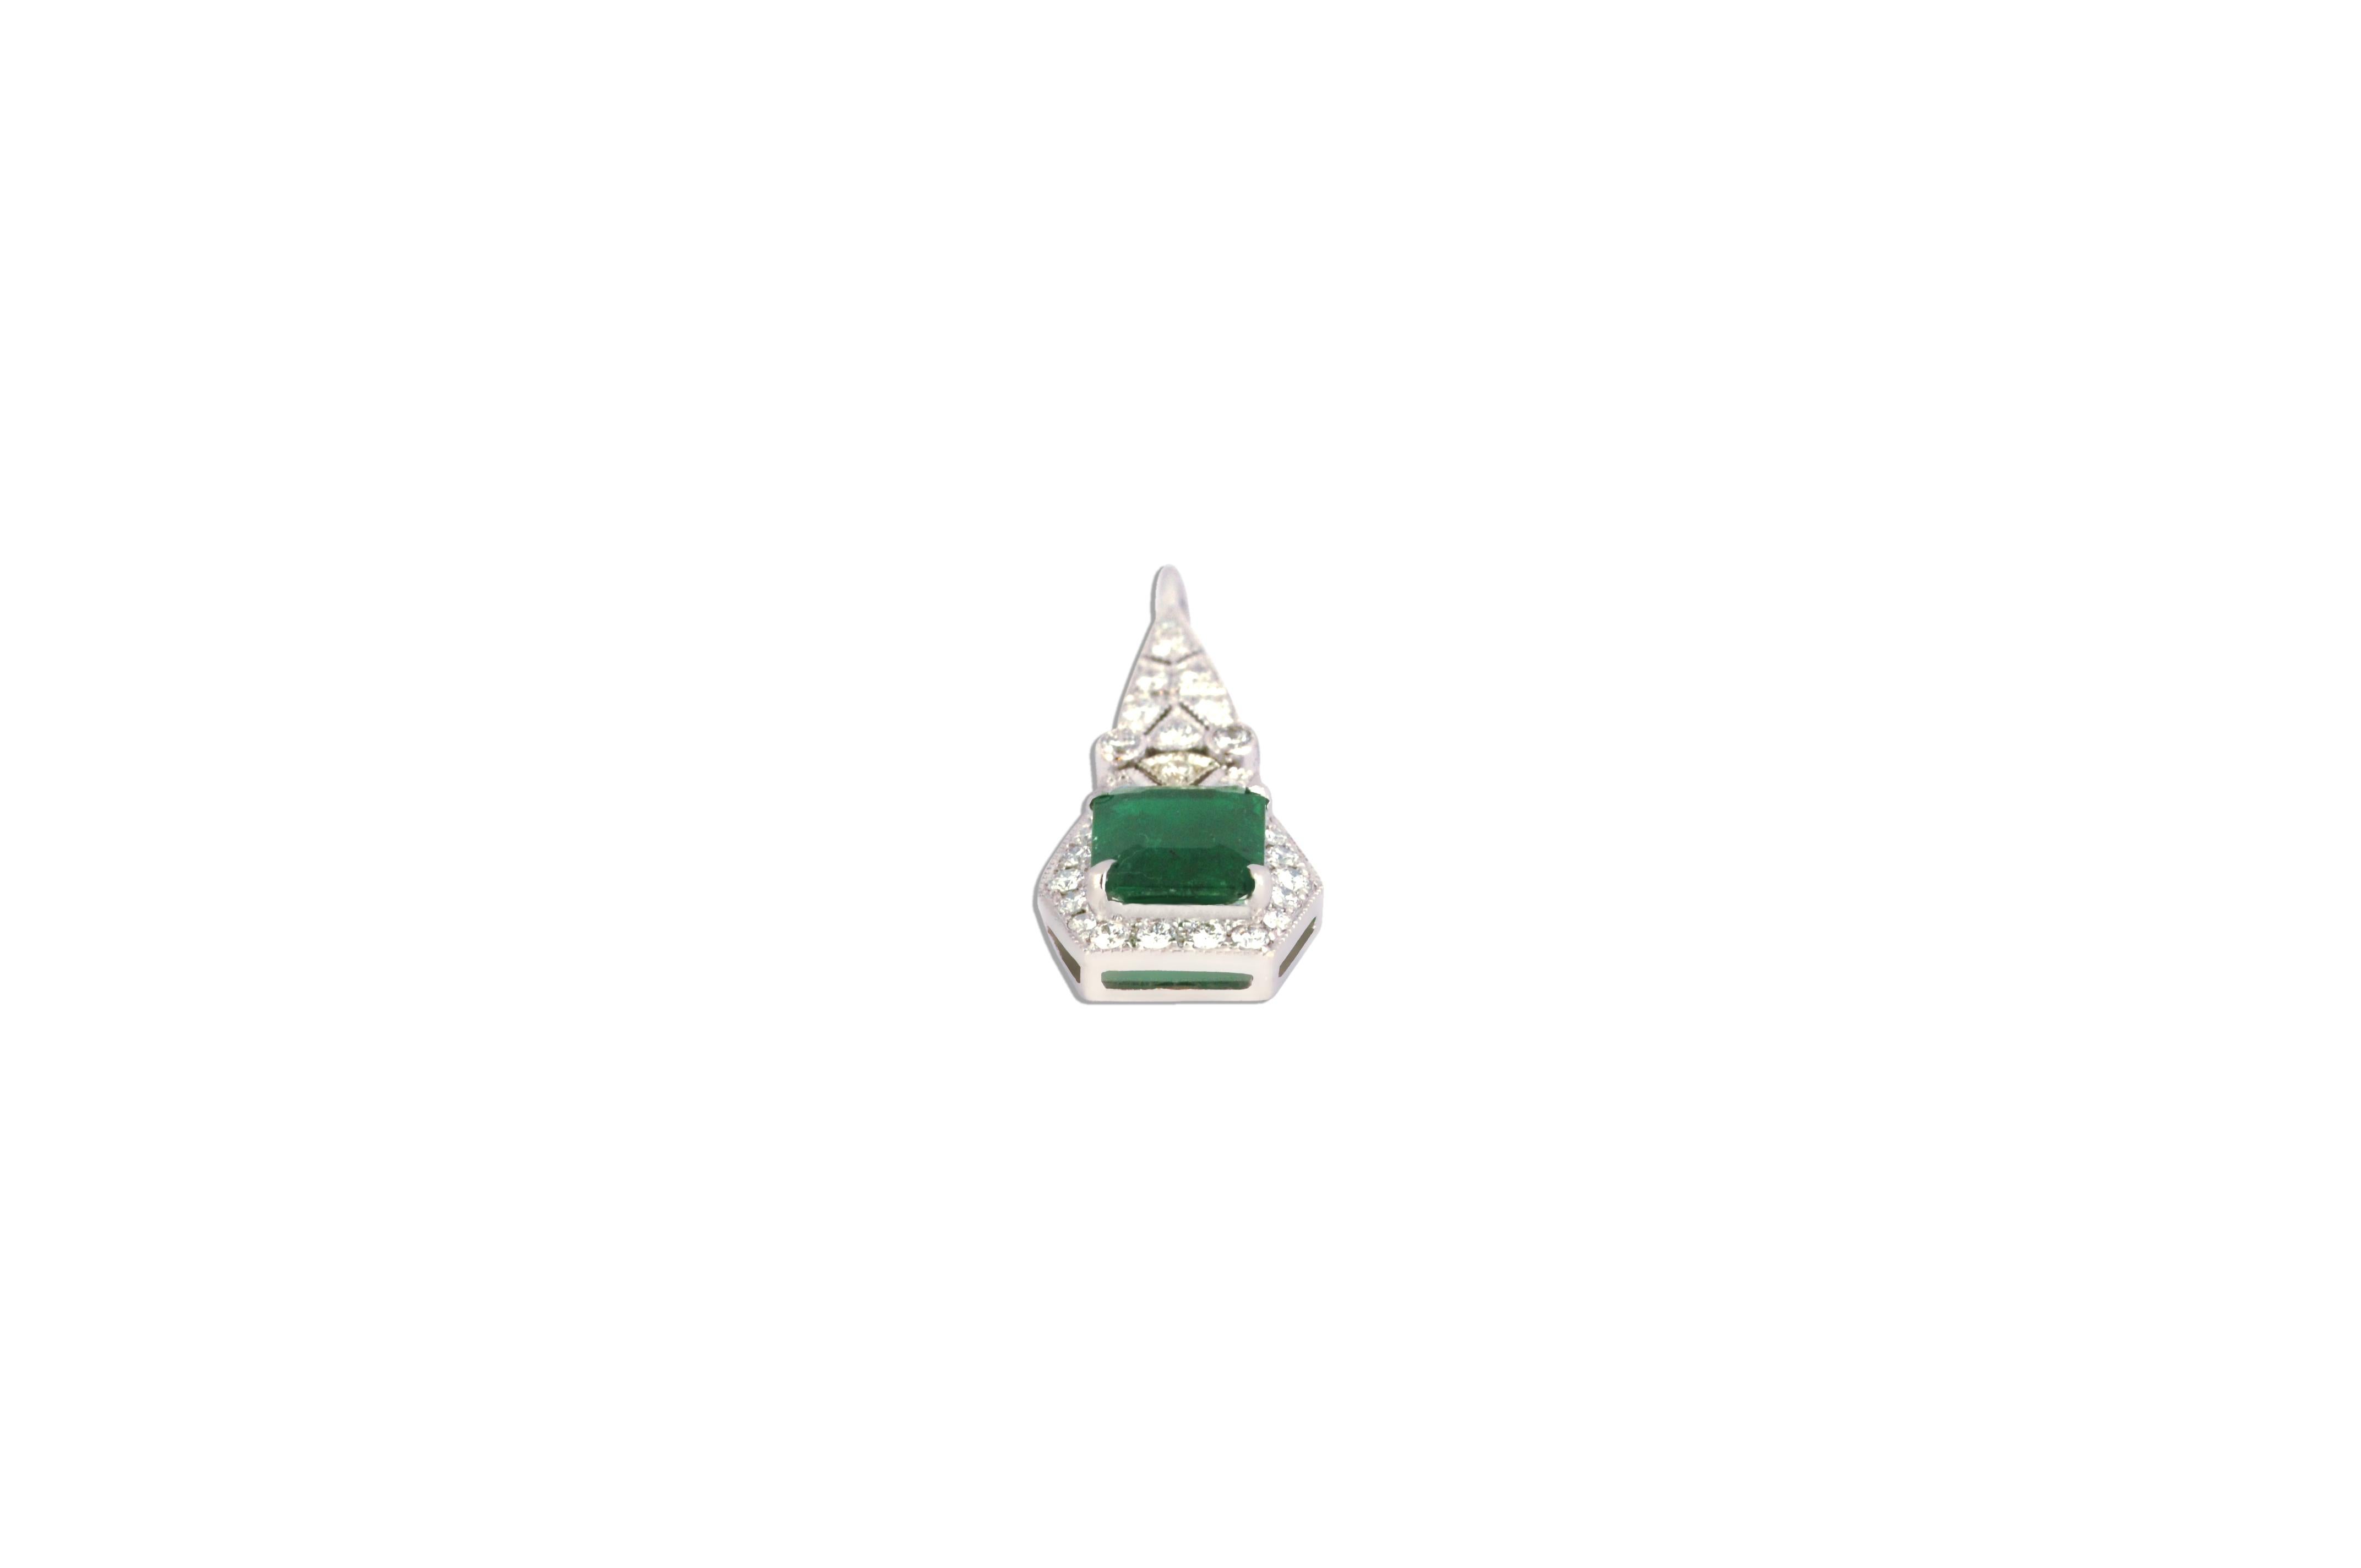 Emerald Cut Emerald 3.42 Carat with Diamond 0.88 Carat Earrings Set in 18 Karat White Gold